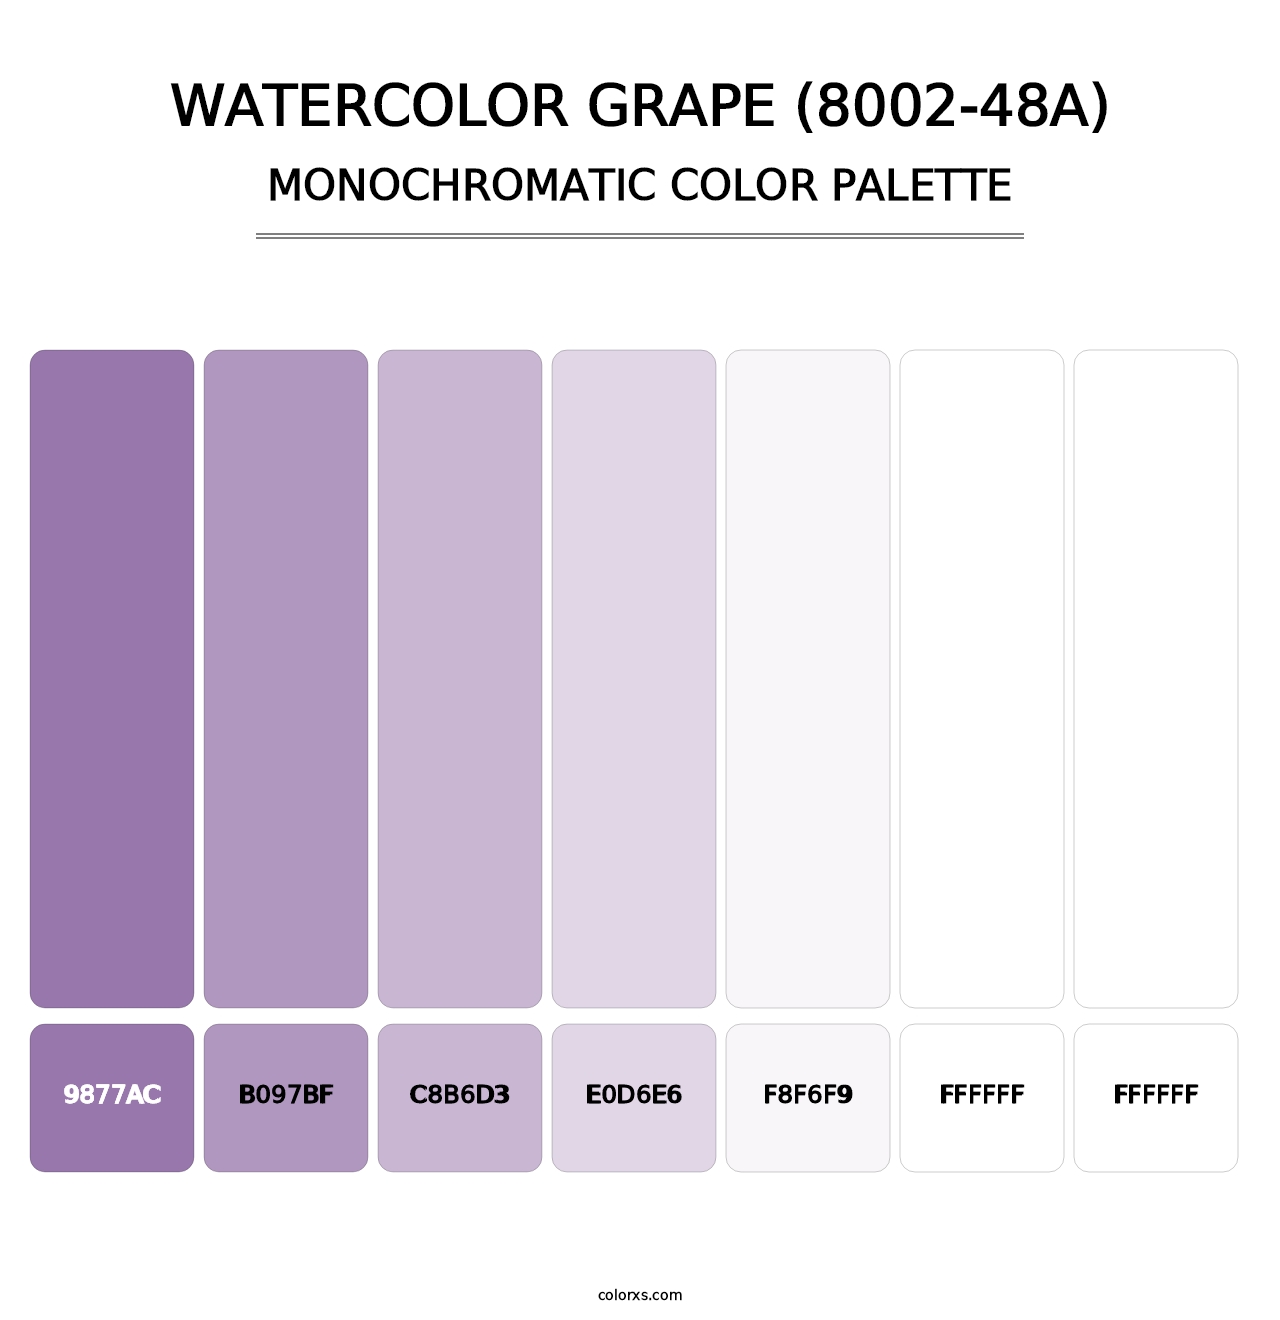 Watercolor Grape (8002-48A) - Monochromatic Color Palette